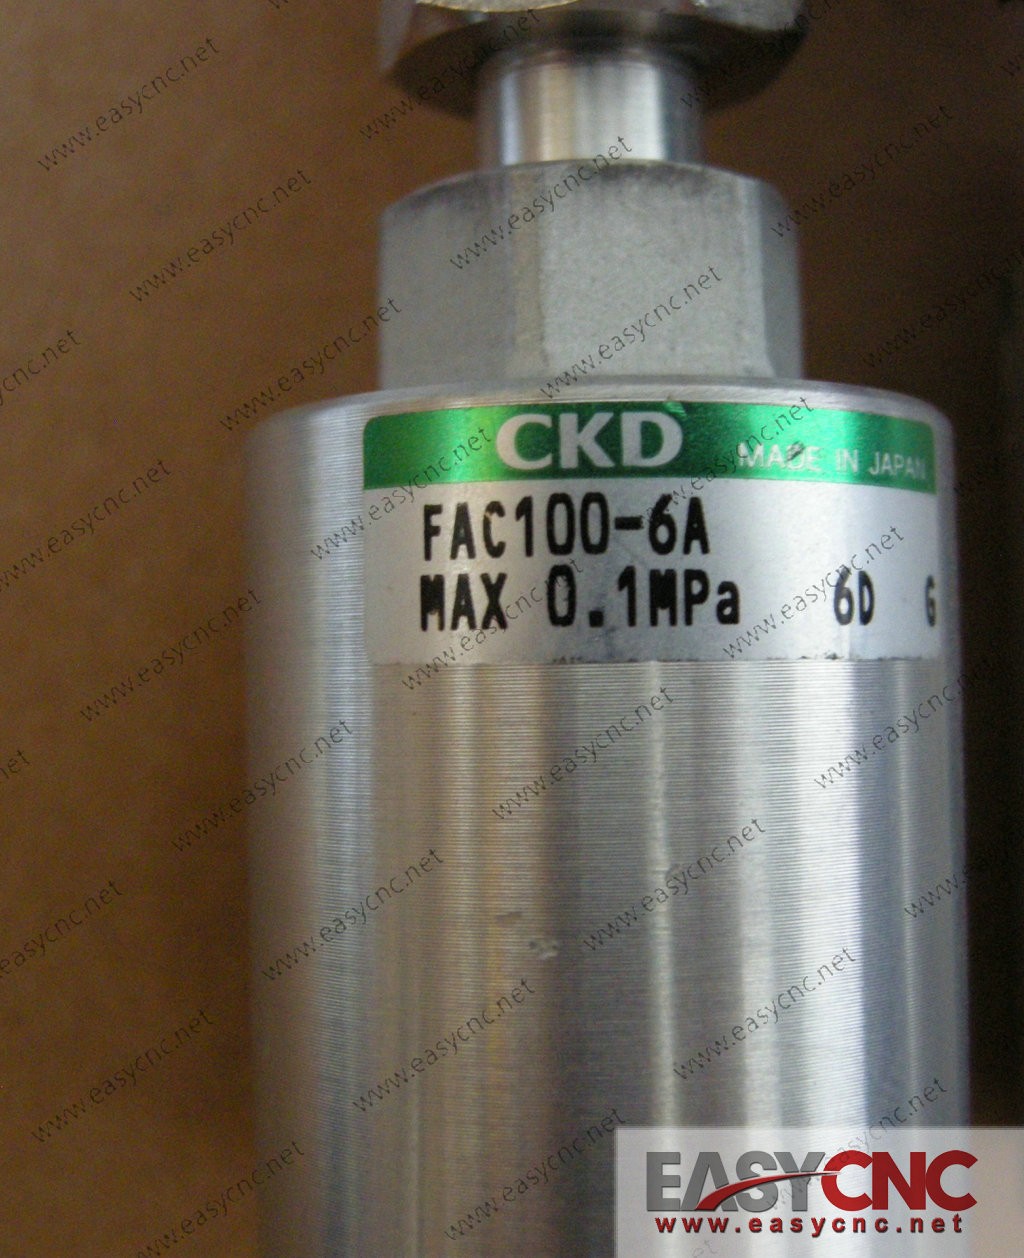 FAC100-6A CKD MADE IN JAPAN MAX 0.1MPa